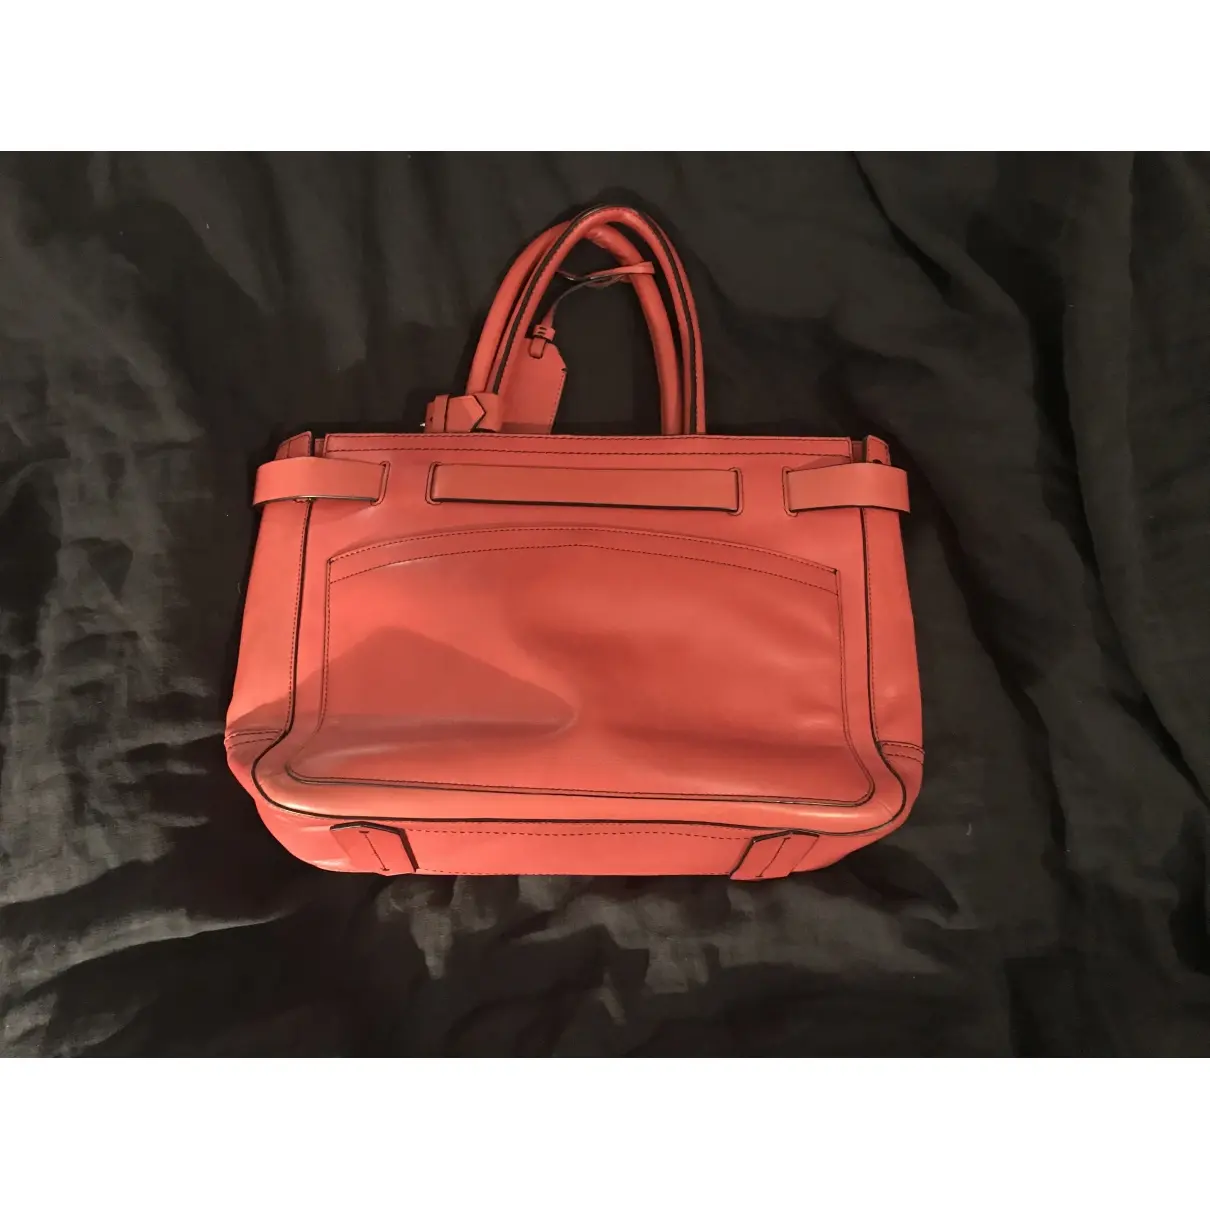 Reed Krakoff Leather handbag for sale